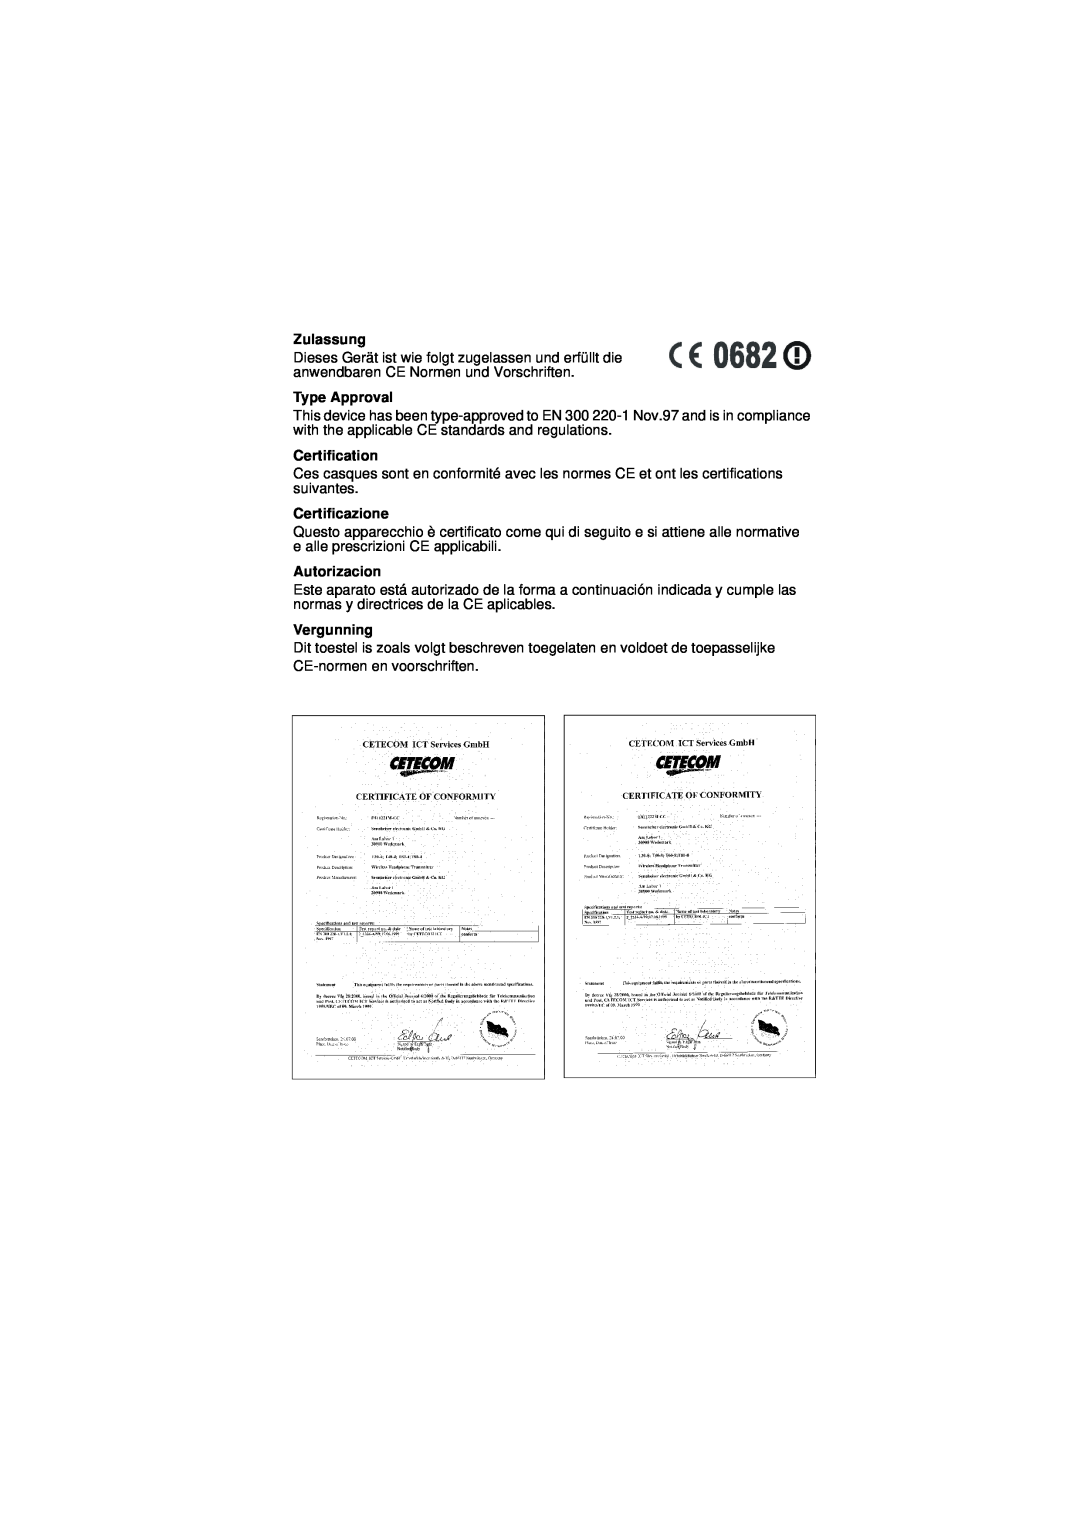 Sennheiser Wireless RS 60 Zulassung, Type Approval, Certification, Certificazione, Autorizacion, Vergunning 